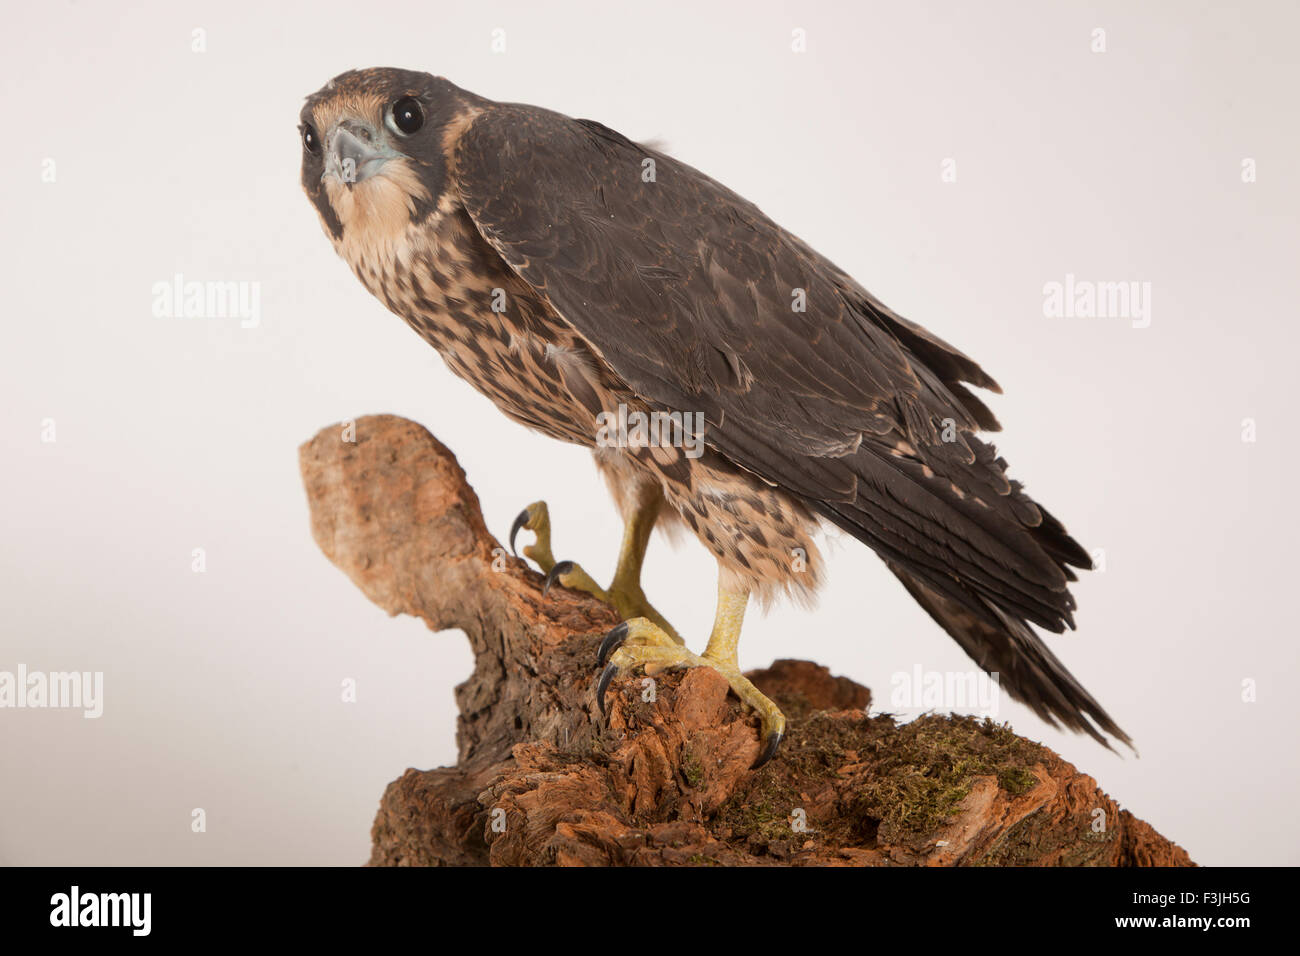 Peregrine Falcon, Falco peregrinus, Bird of prey, Studio, White background, Adult, Branch, Rescued, Rescue, WIldlife, Injured Stock Photo